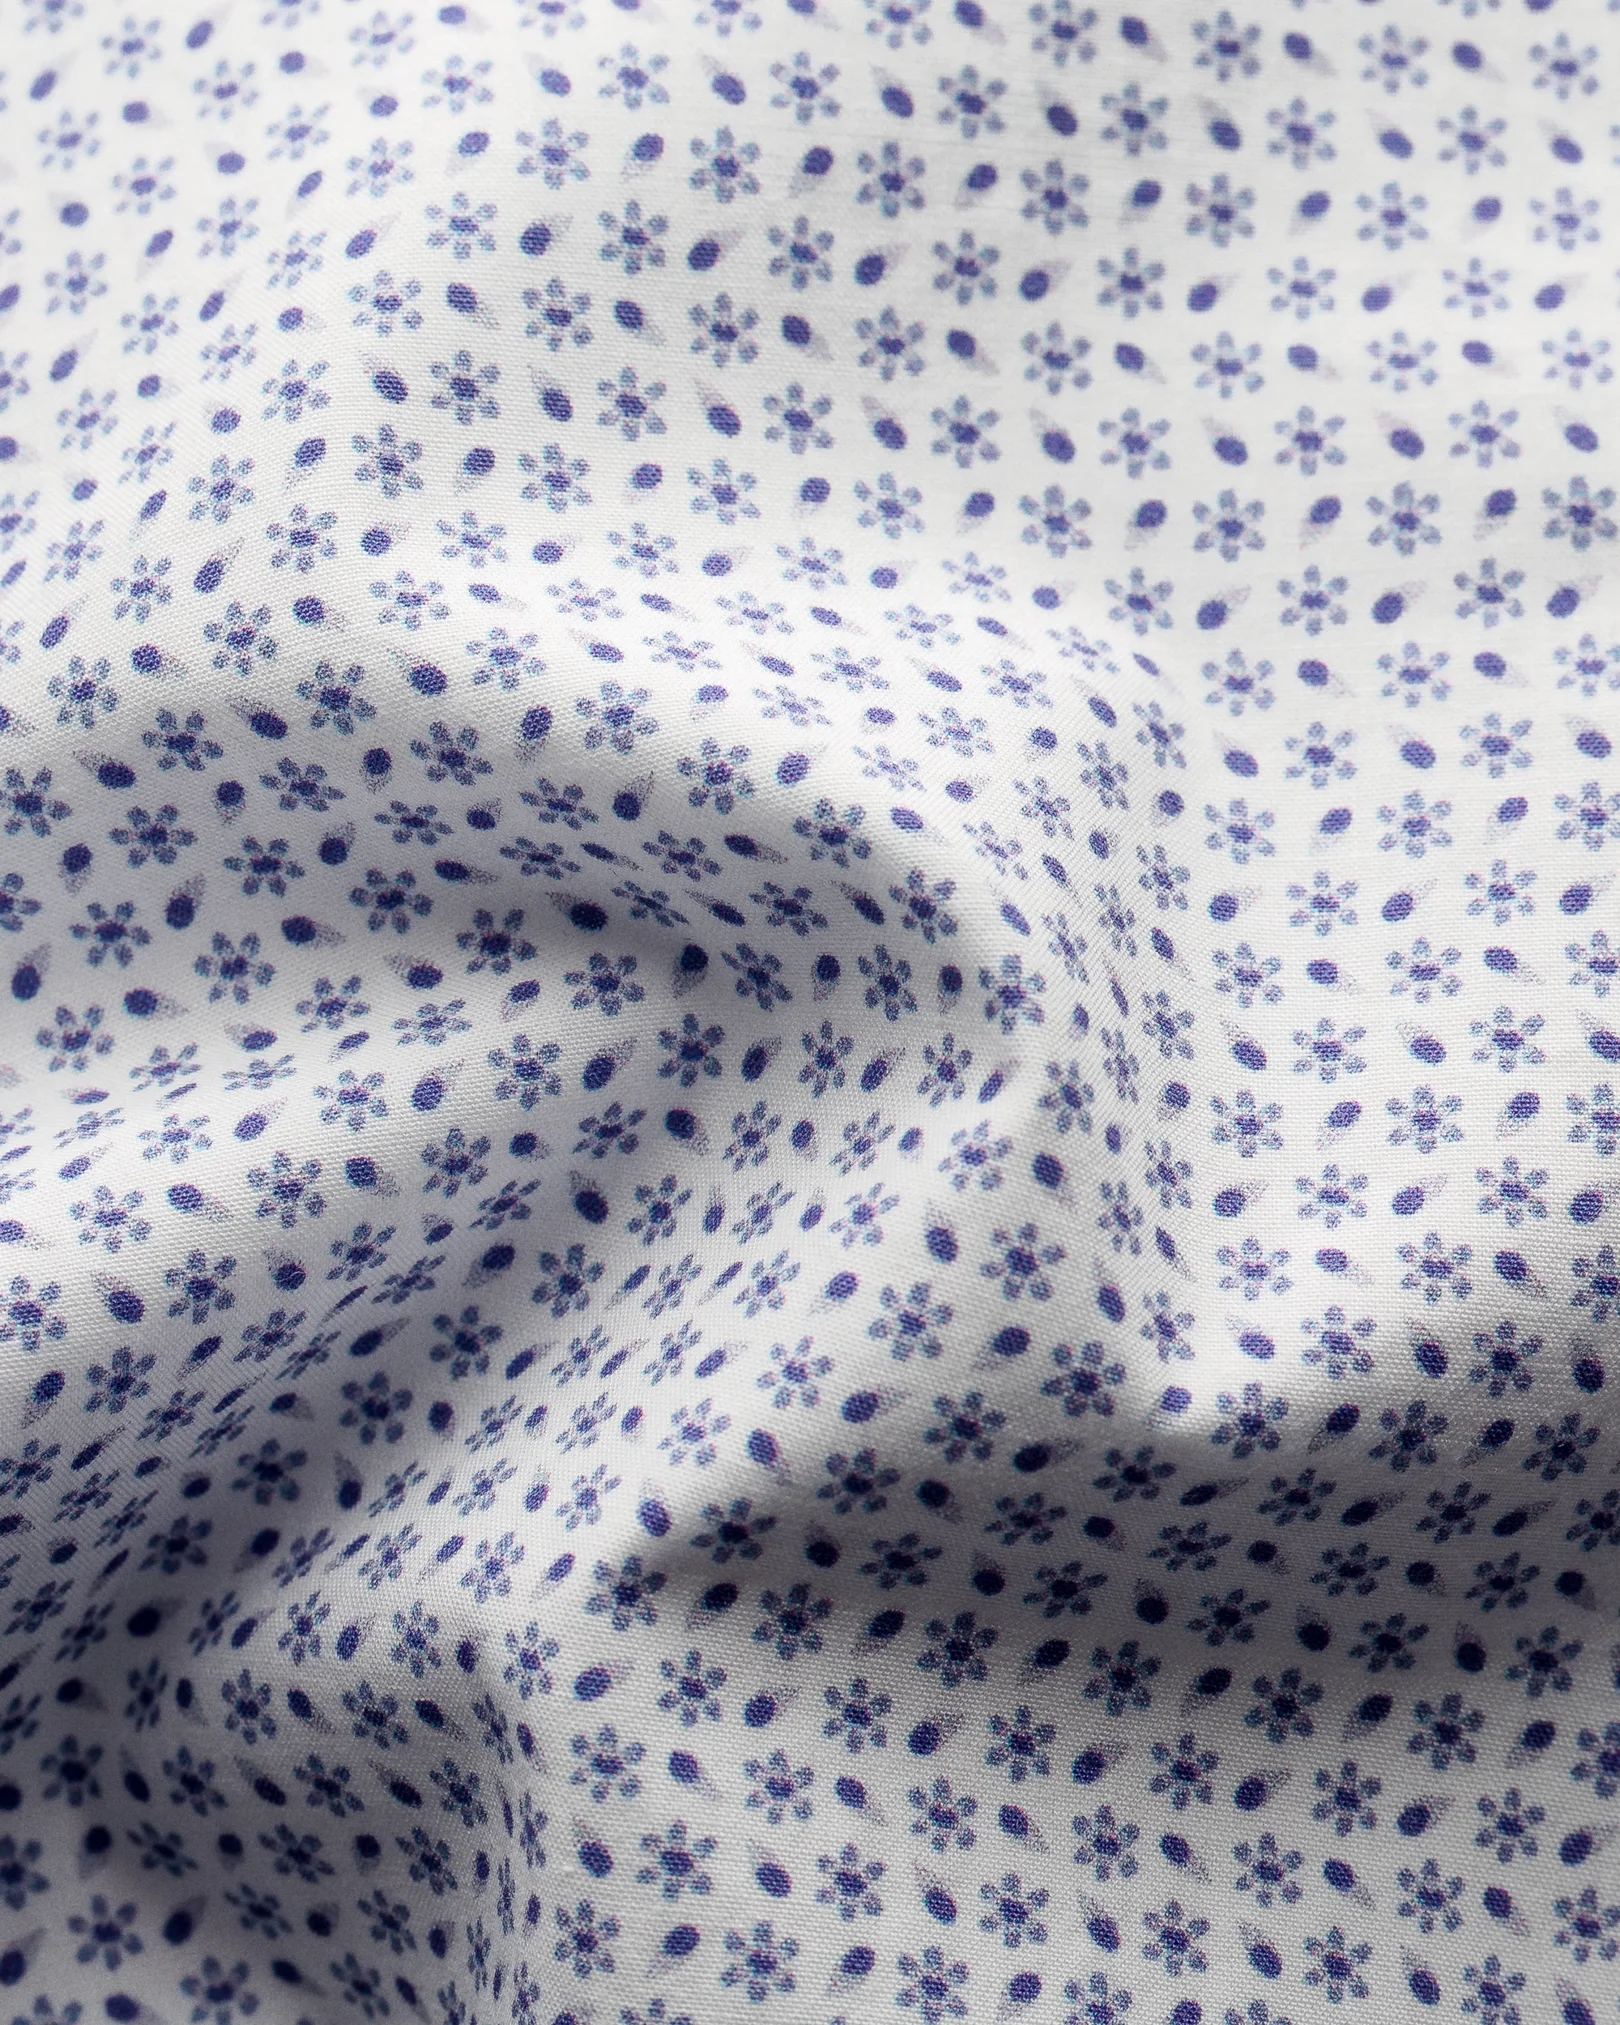 Eton - microprinted floral poplin shirt soft